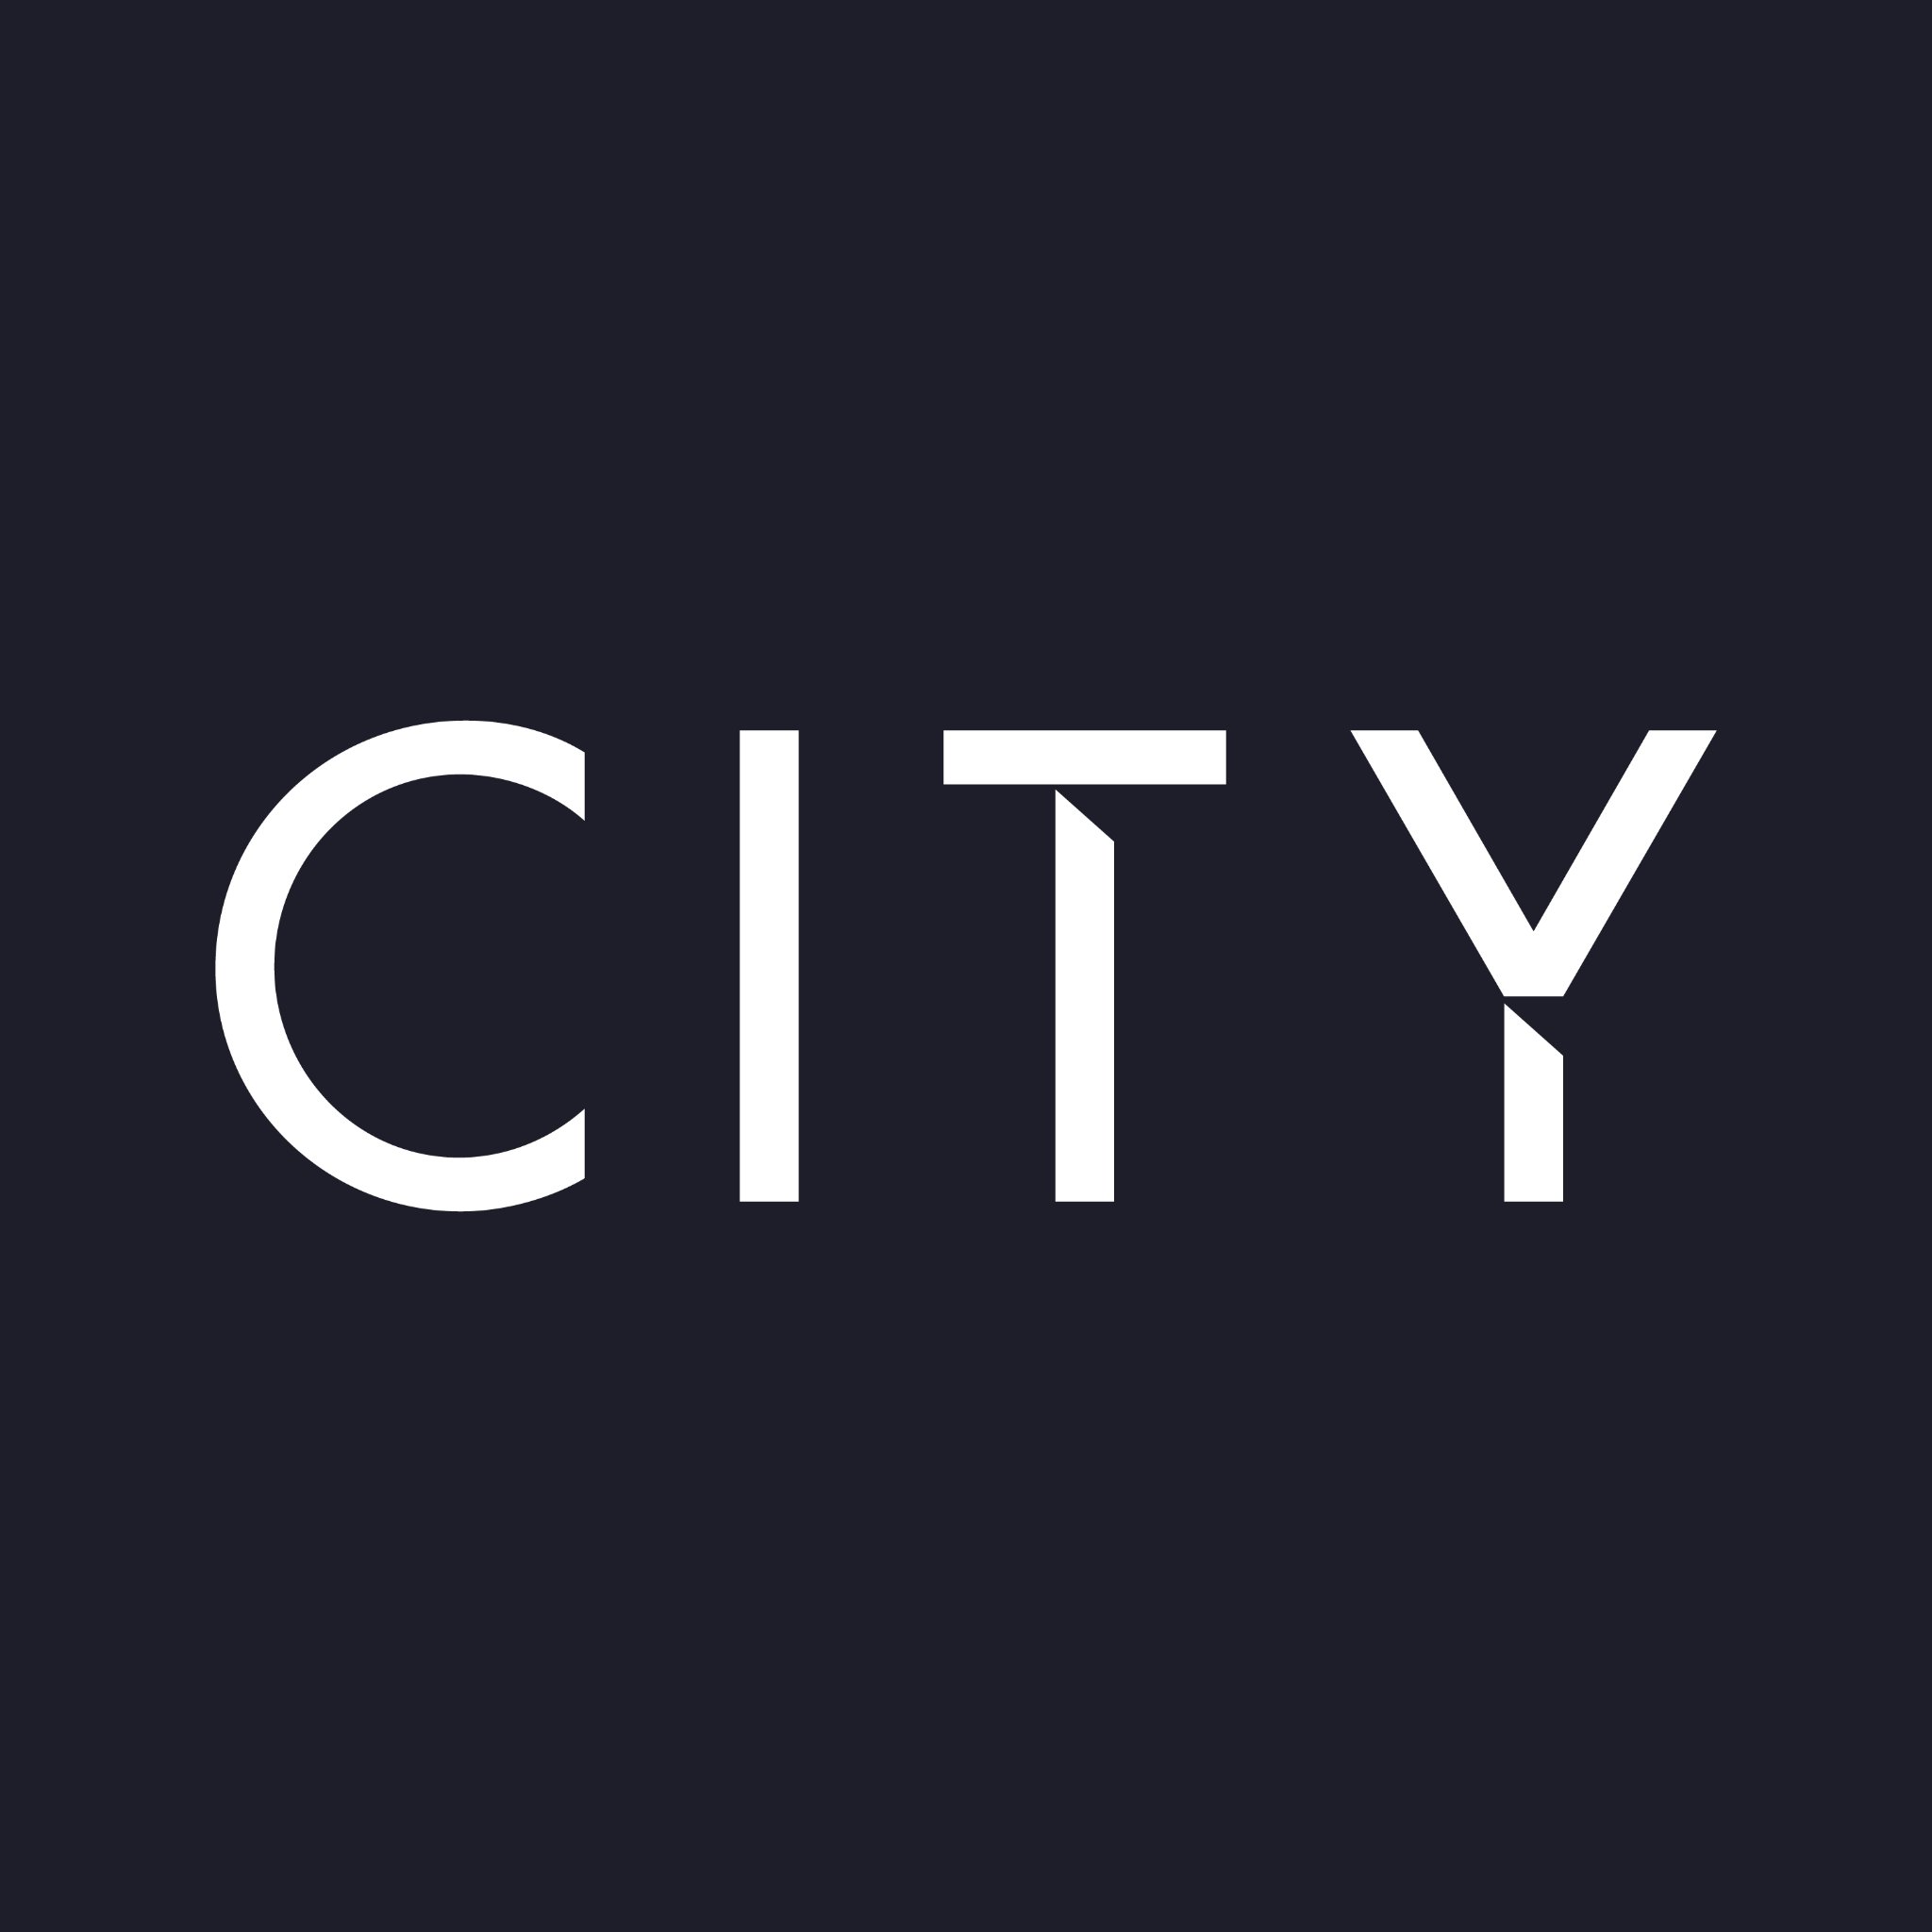 City Executive Search